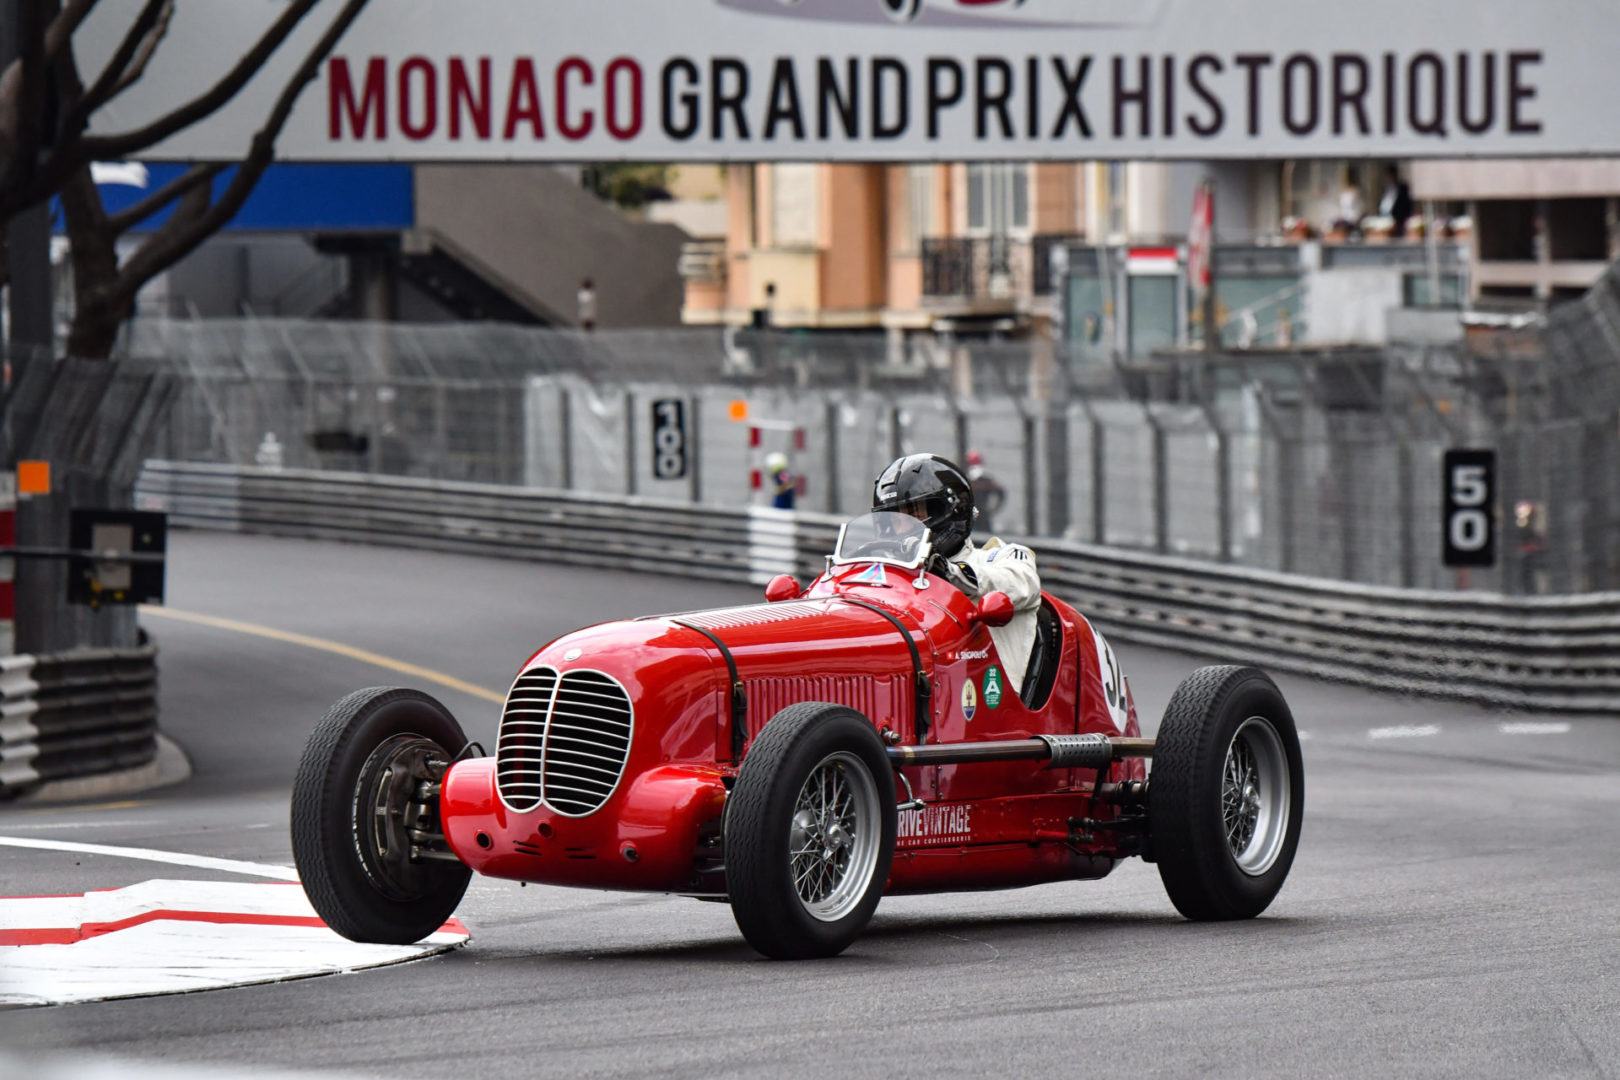 12e Grand Prix de Monaco Historique 23-25 avril | Rétro Passion Automobiles